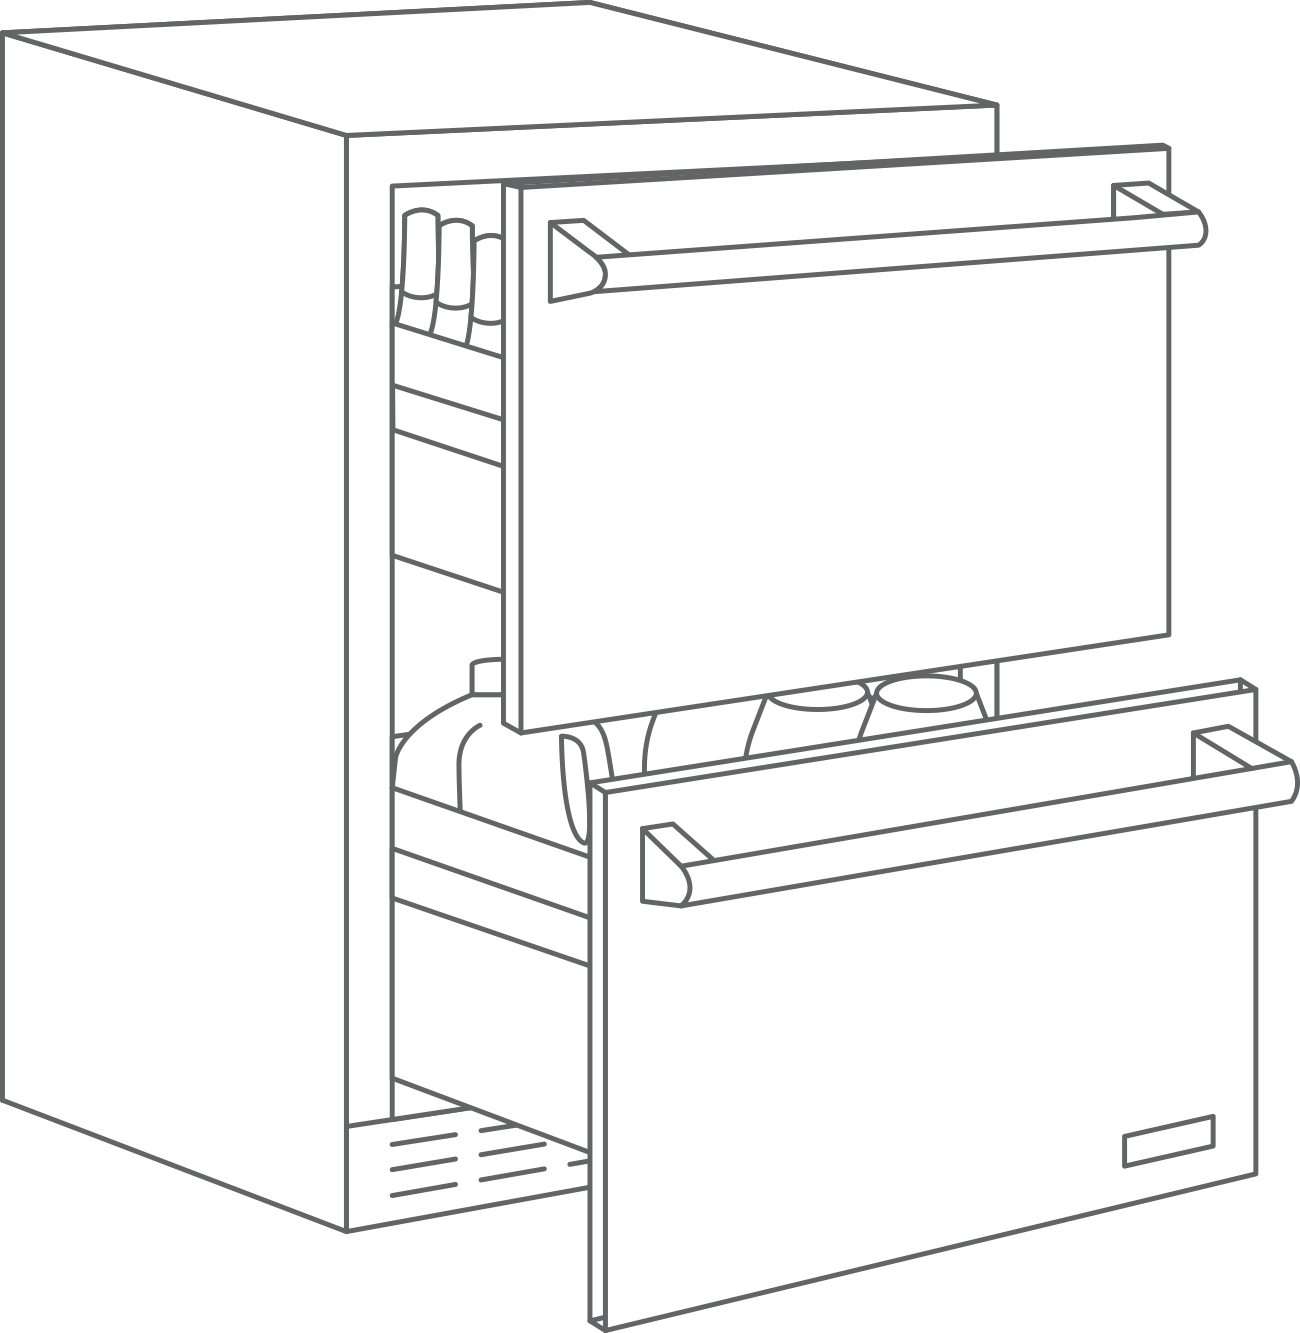 Undercounter refrigerator digital sketch